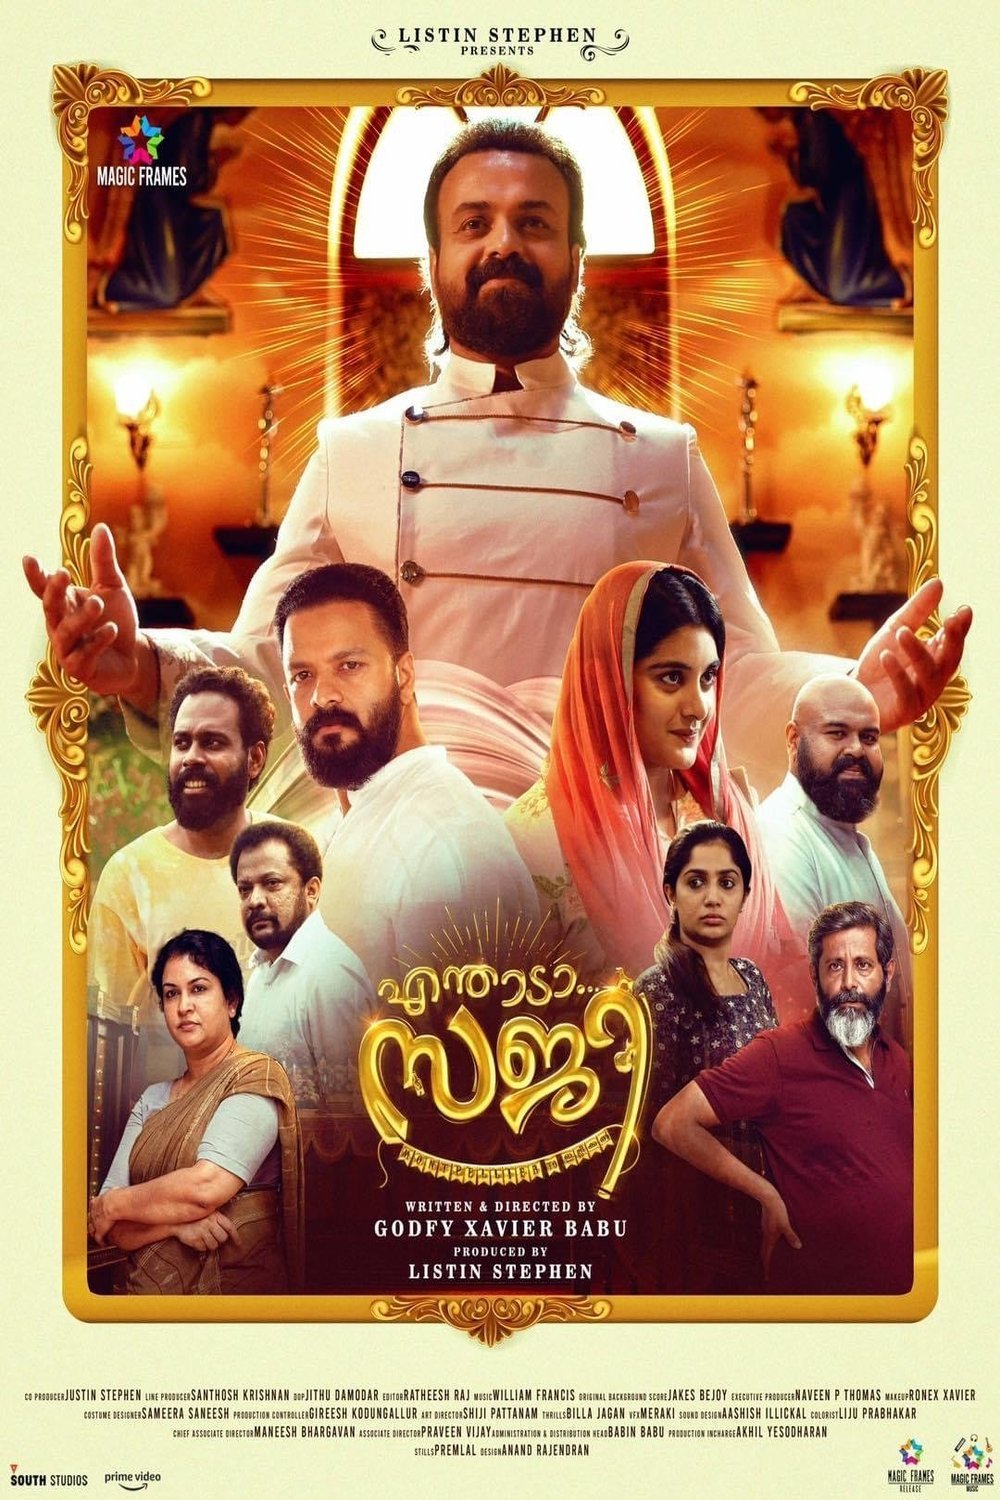 Malayalam poster of the movie Enthada Saji